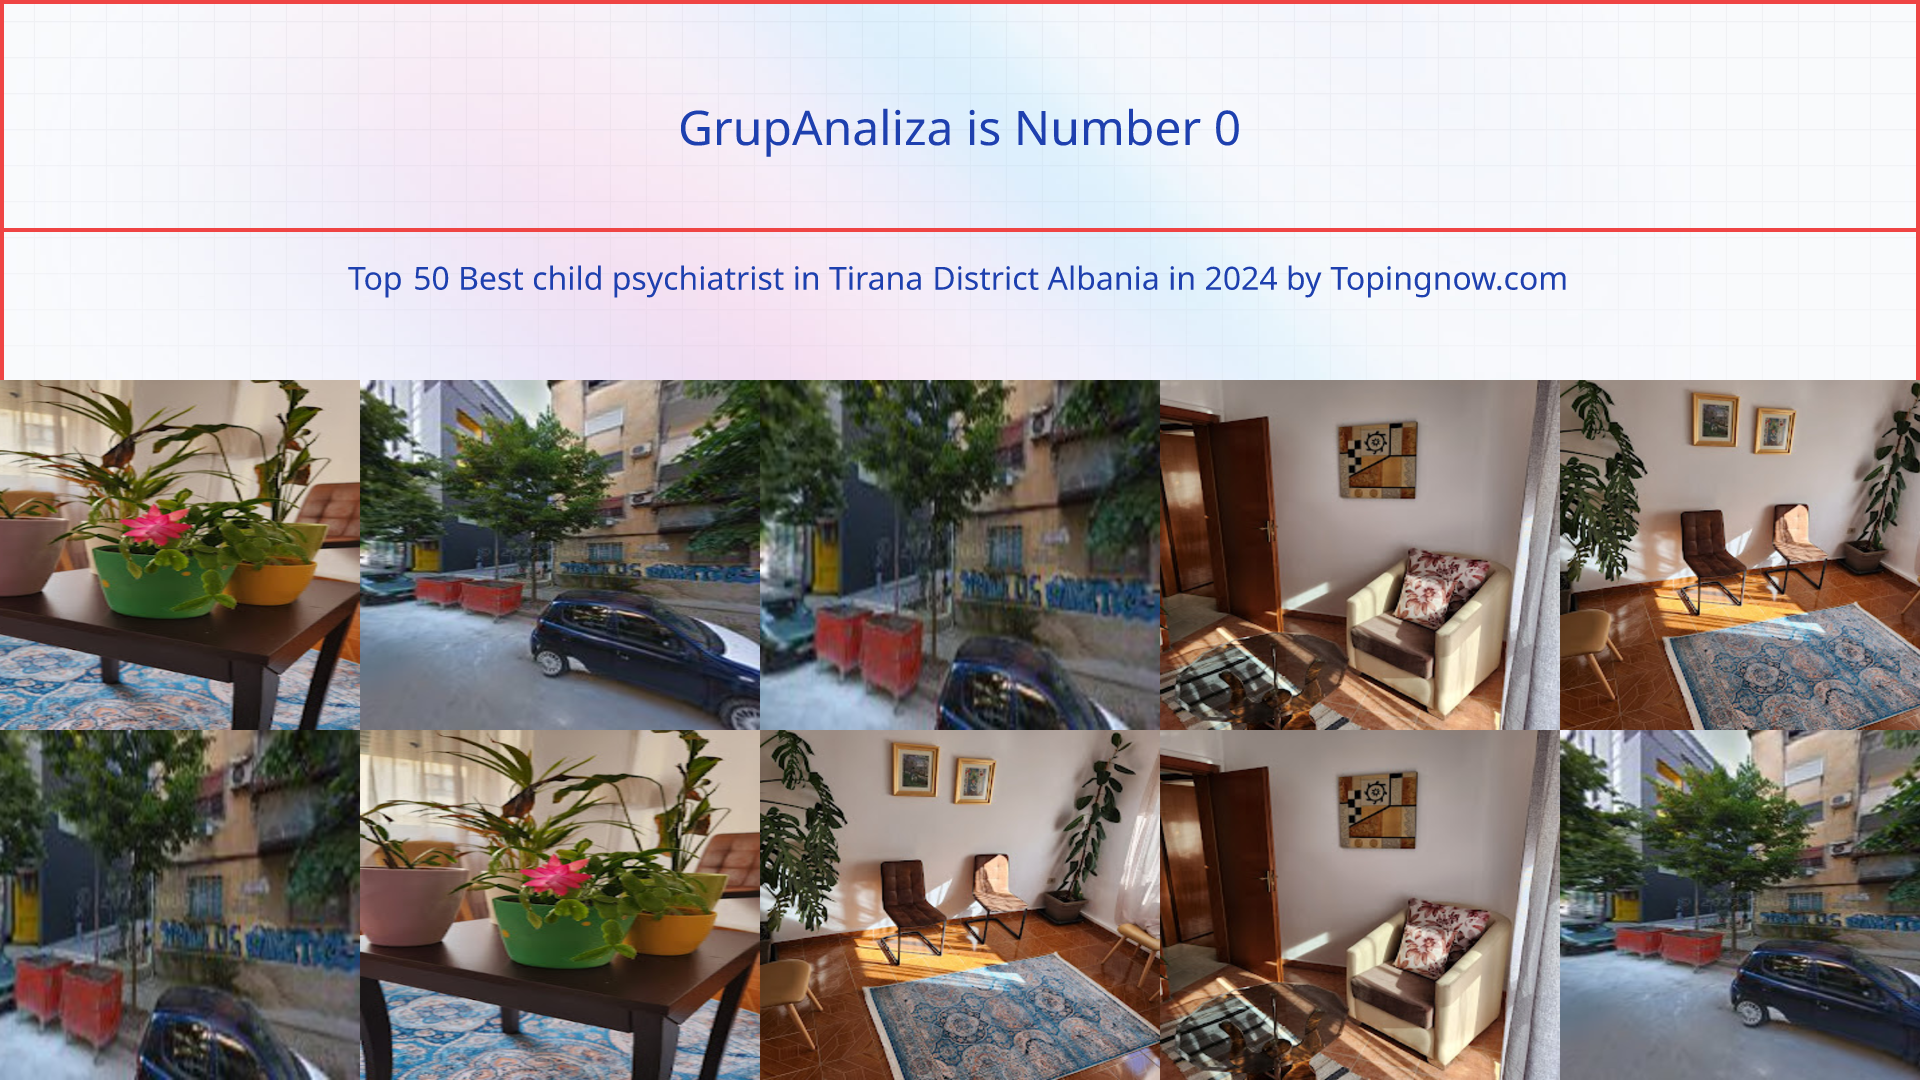 GrupAnaliza: Top 50 Best child psychiatrist in Tirana District Albania in 2024